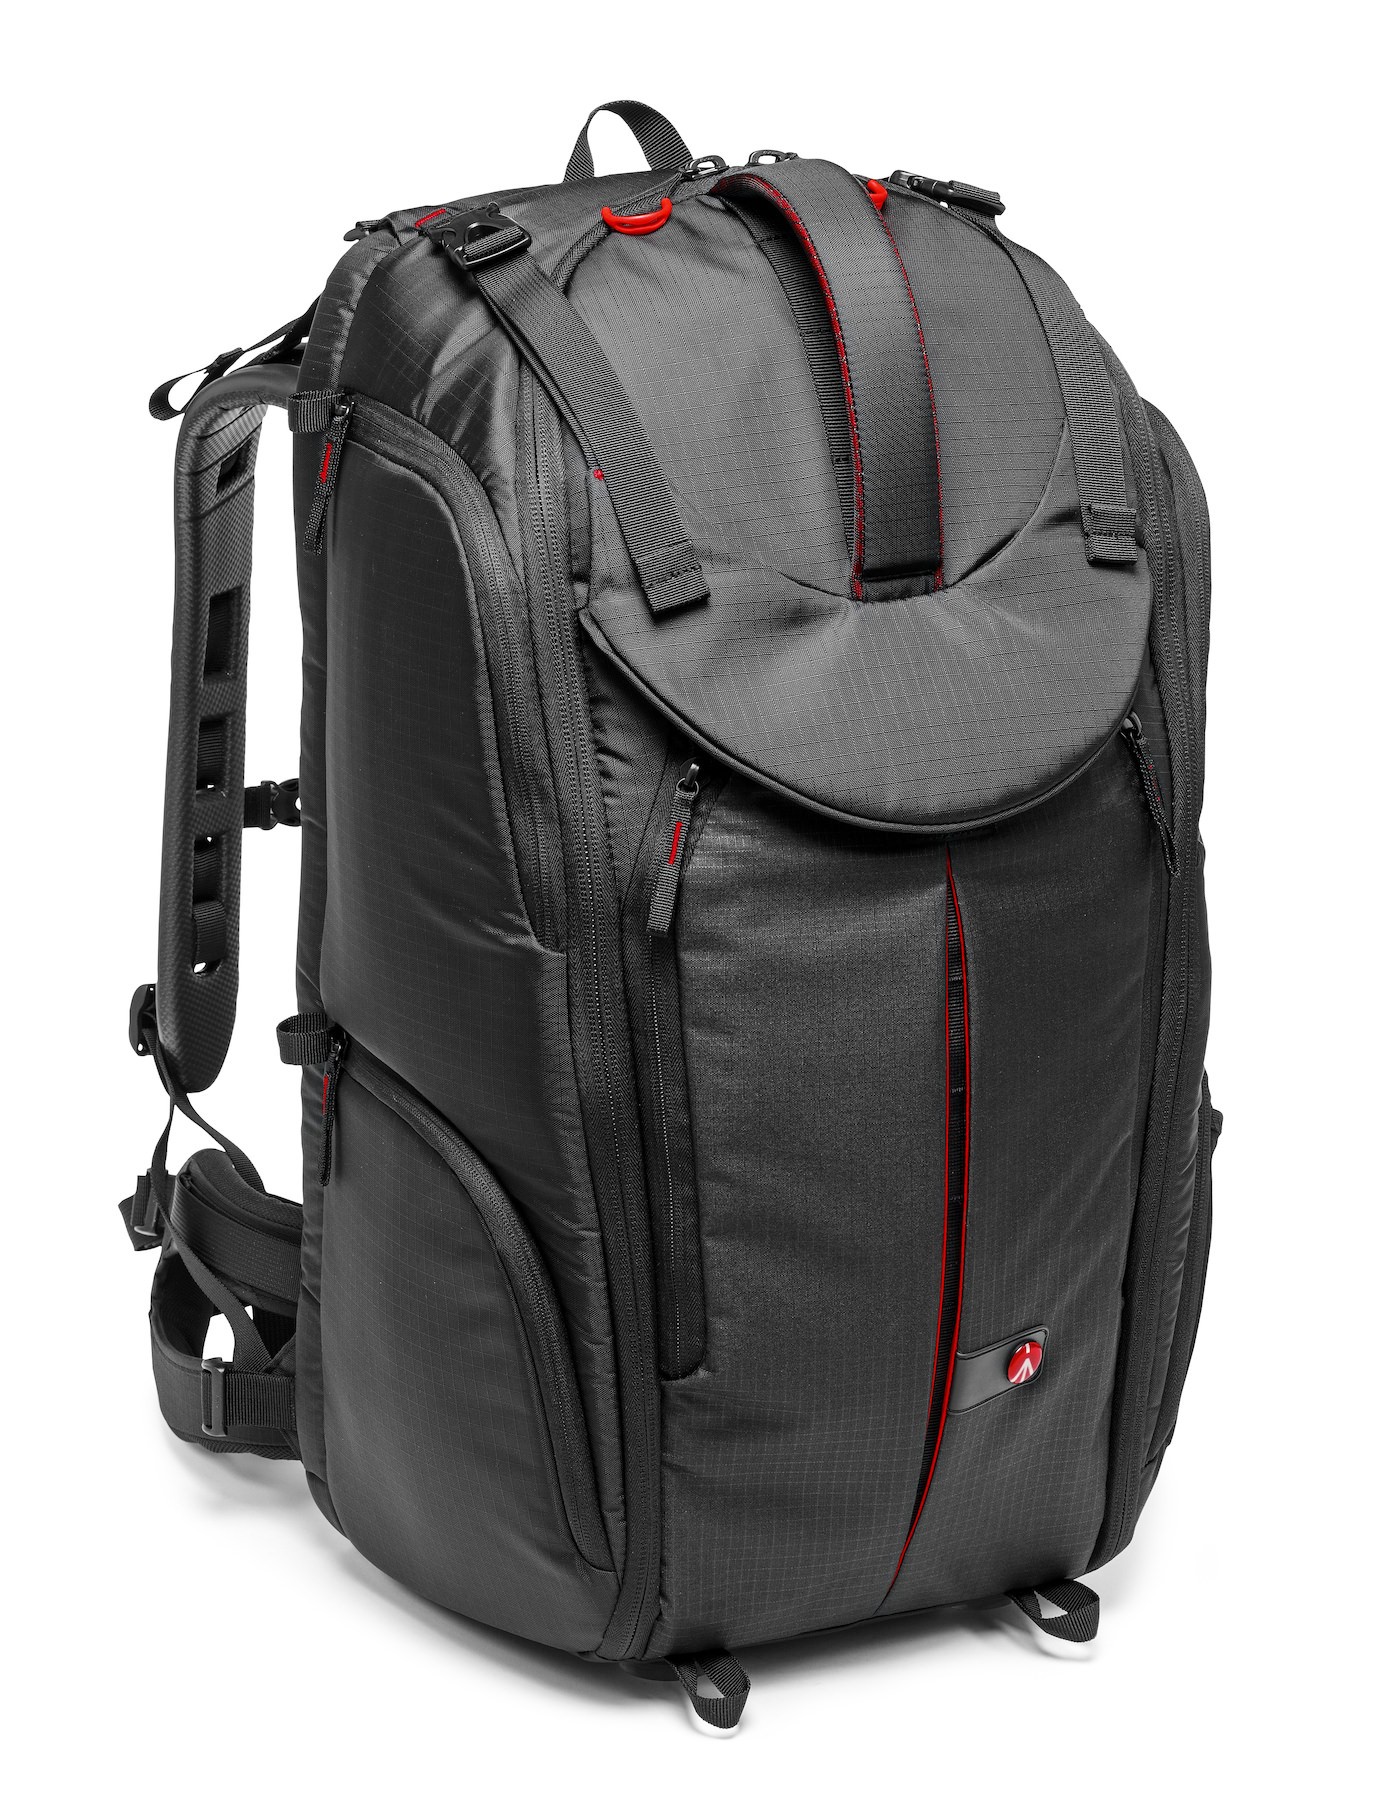 Pro Light camera backpack PV-6